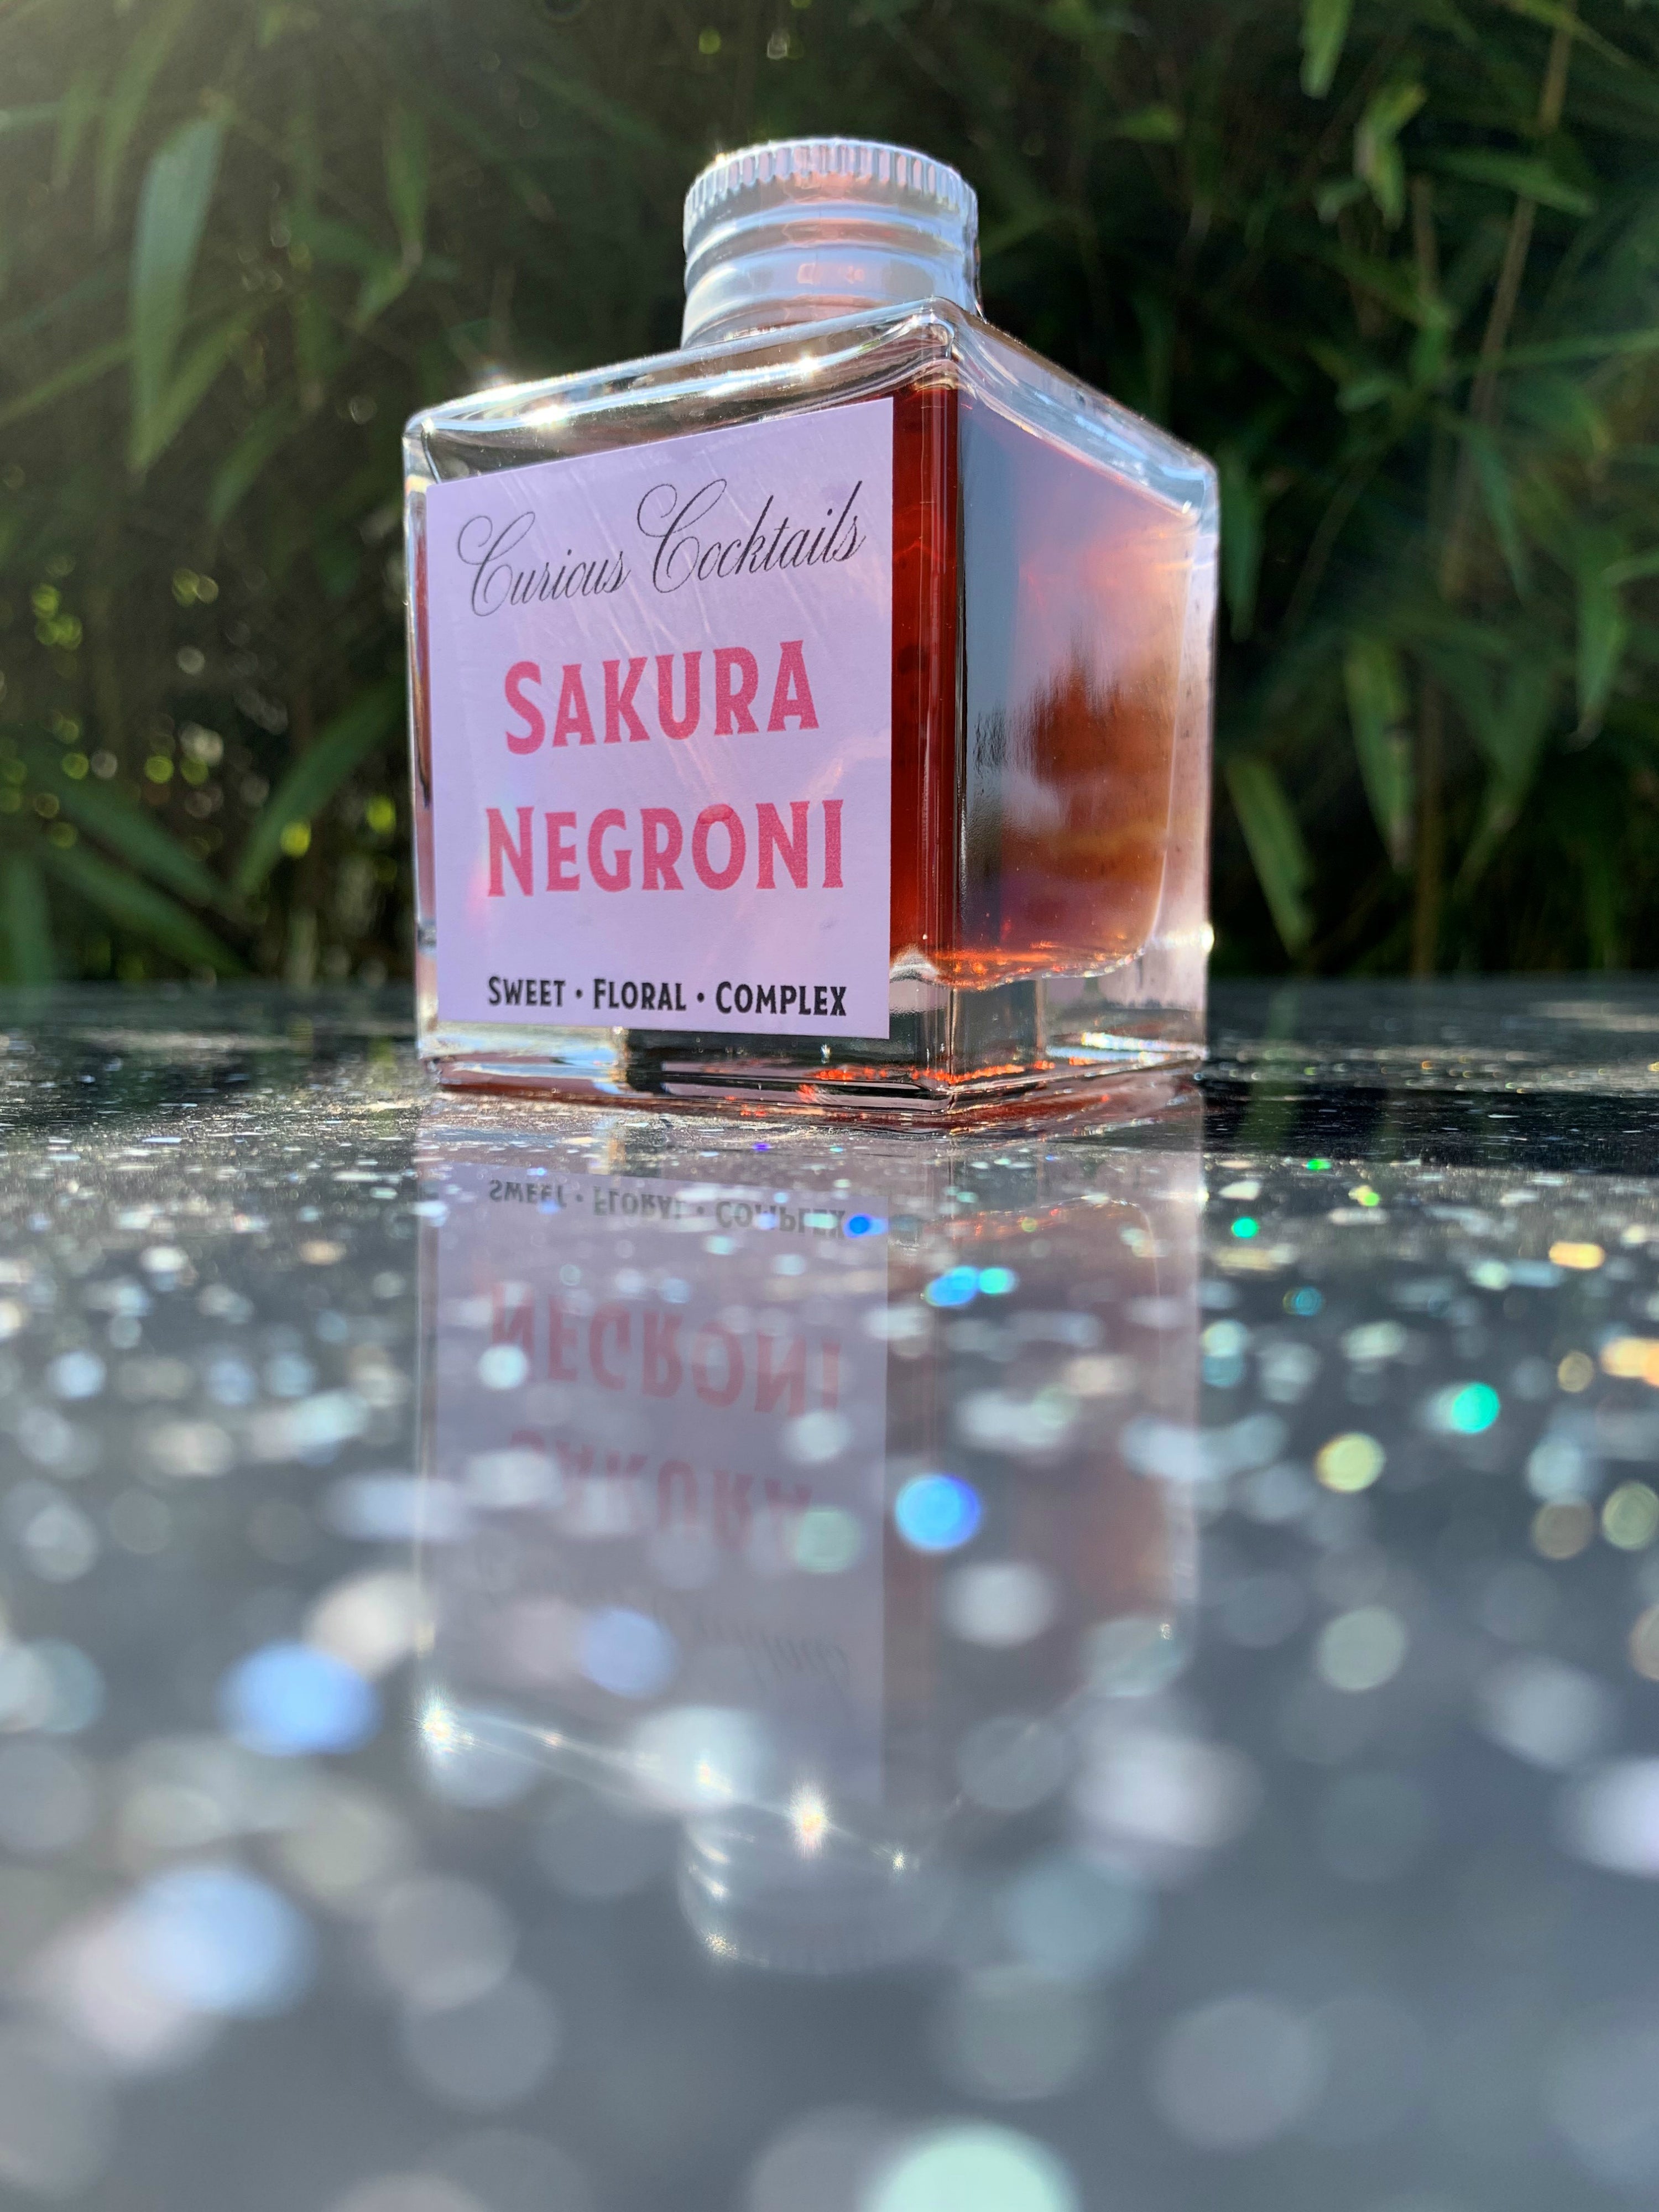 Curious Cocktails: Sakura Negroni 100ml Glass Bottle